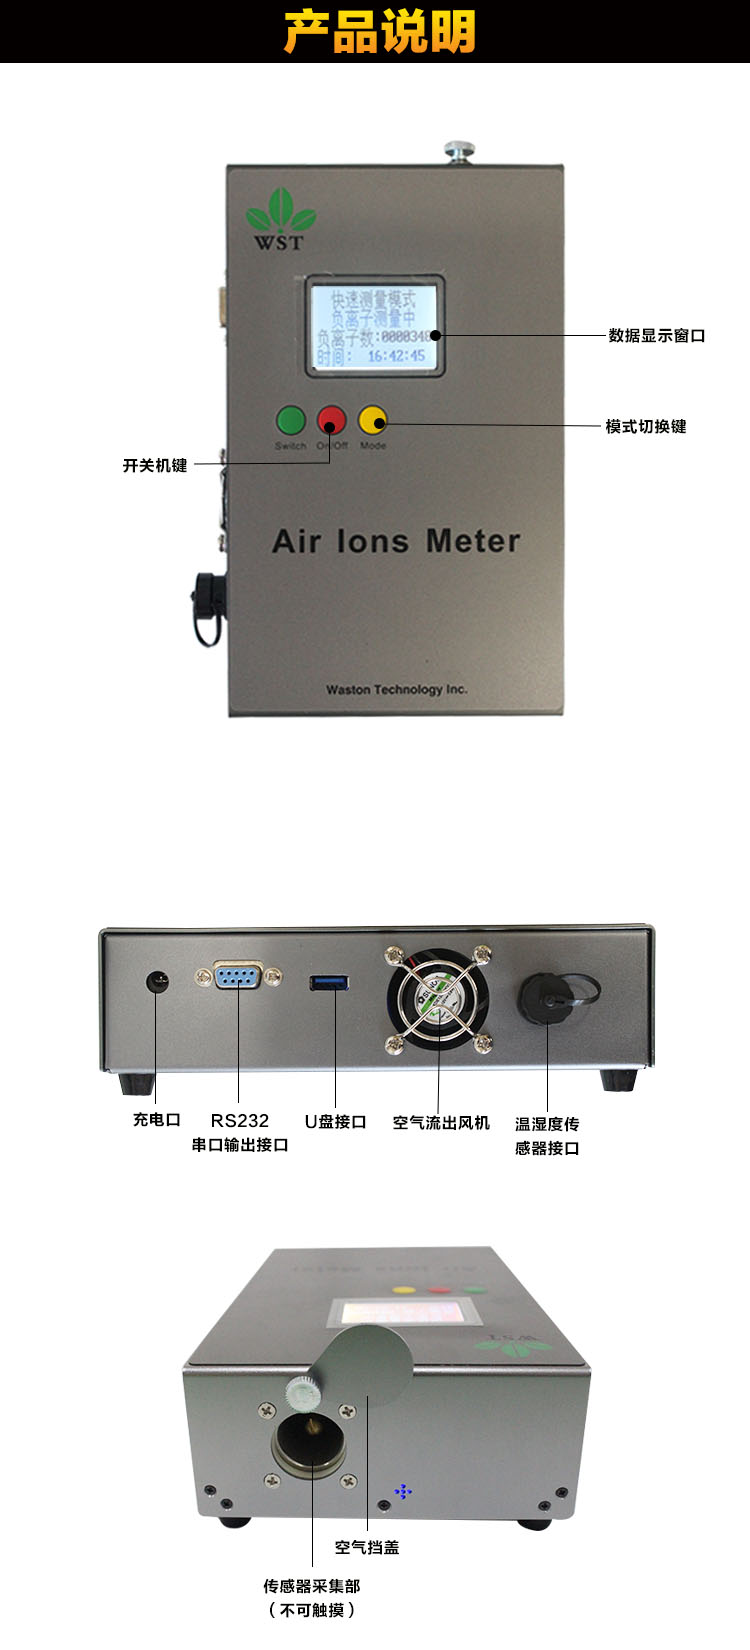 AIC-1000/AIC3000负离子检测仪美国AIC2000